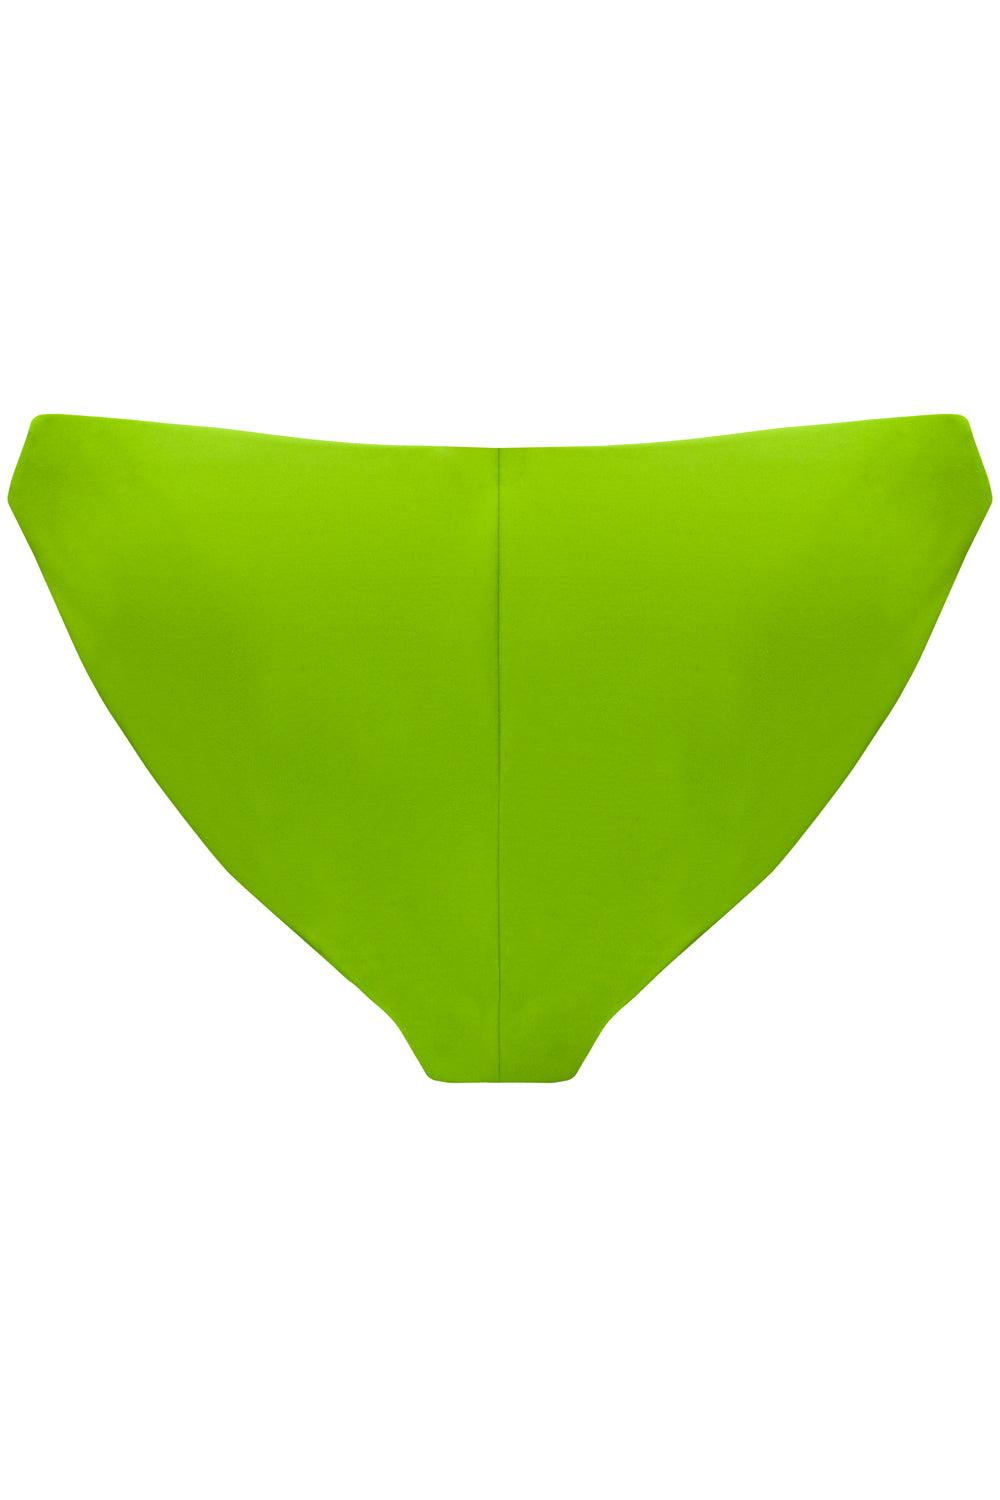 Radiya Greenery bikini bottom - Bikini bottom by Keosme. Shop on yesUndress